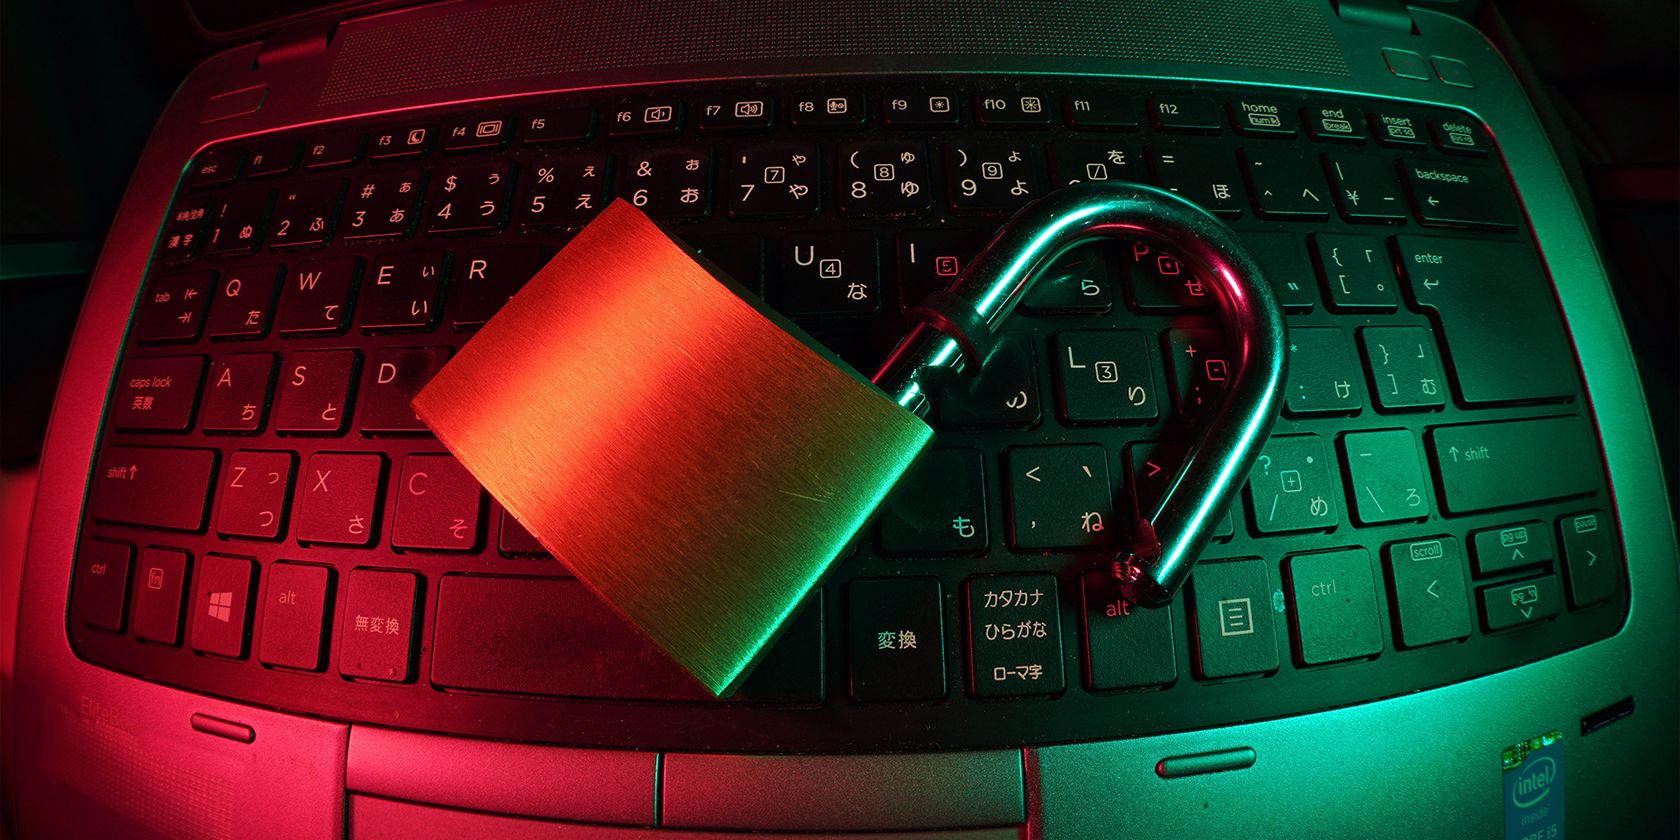 Padlock on a laptop keyboard to represent file encryption